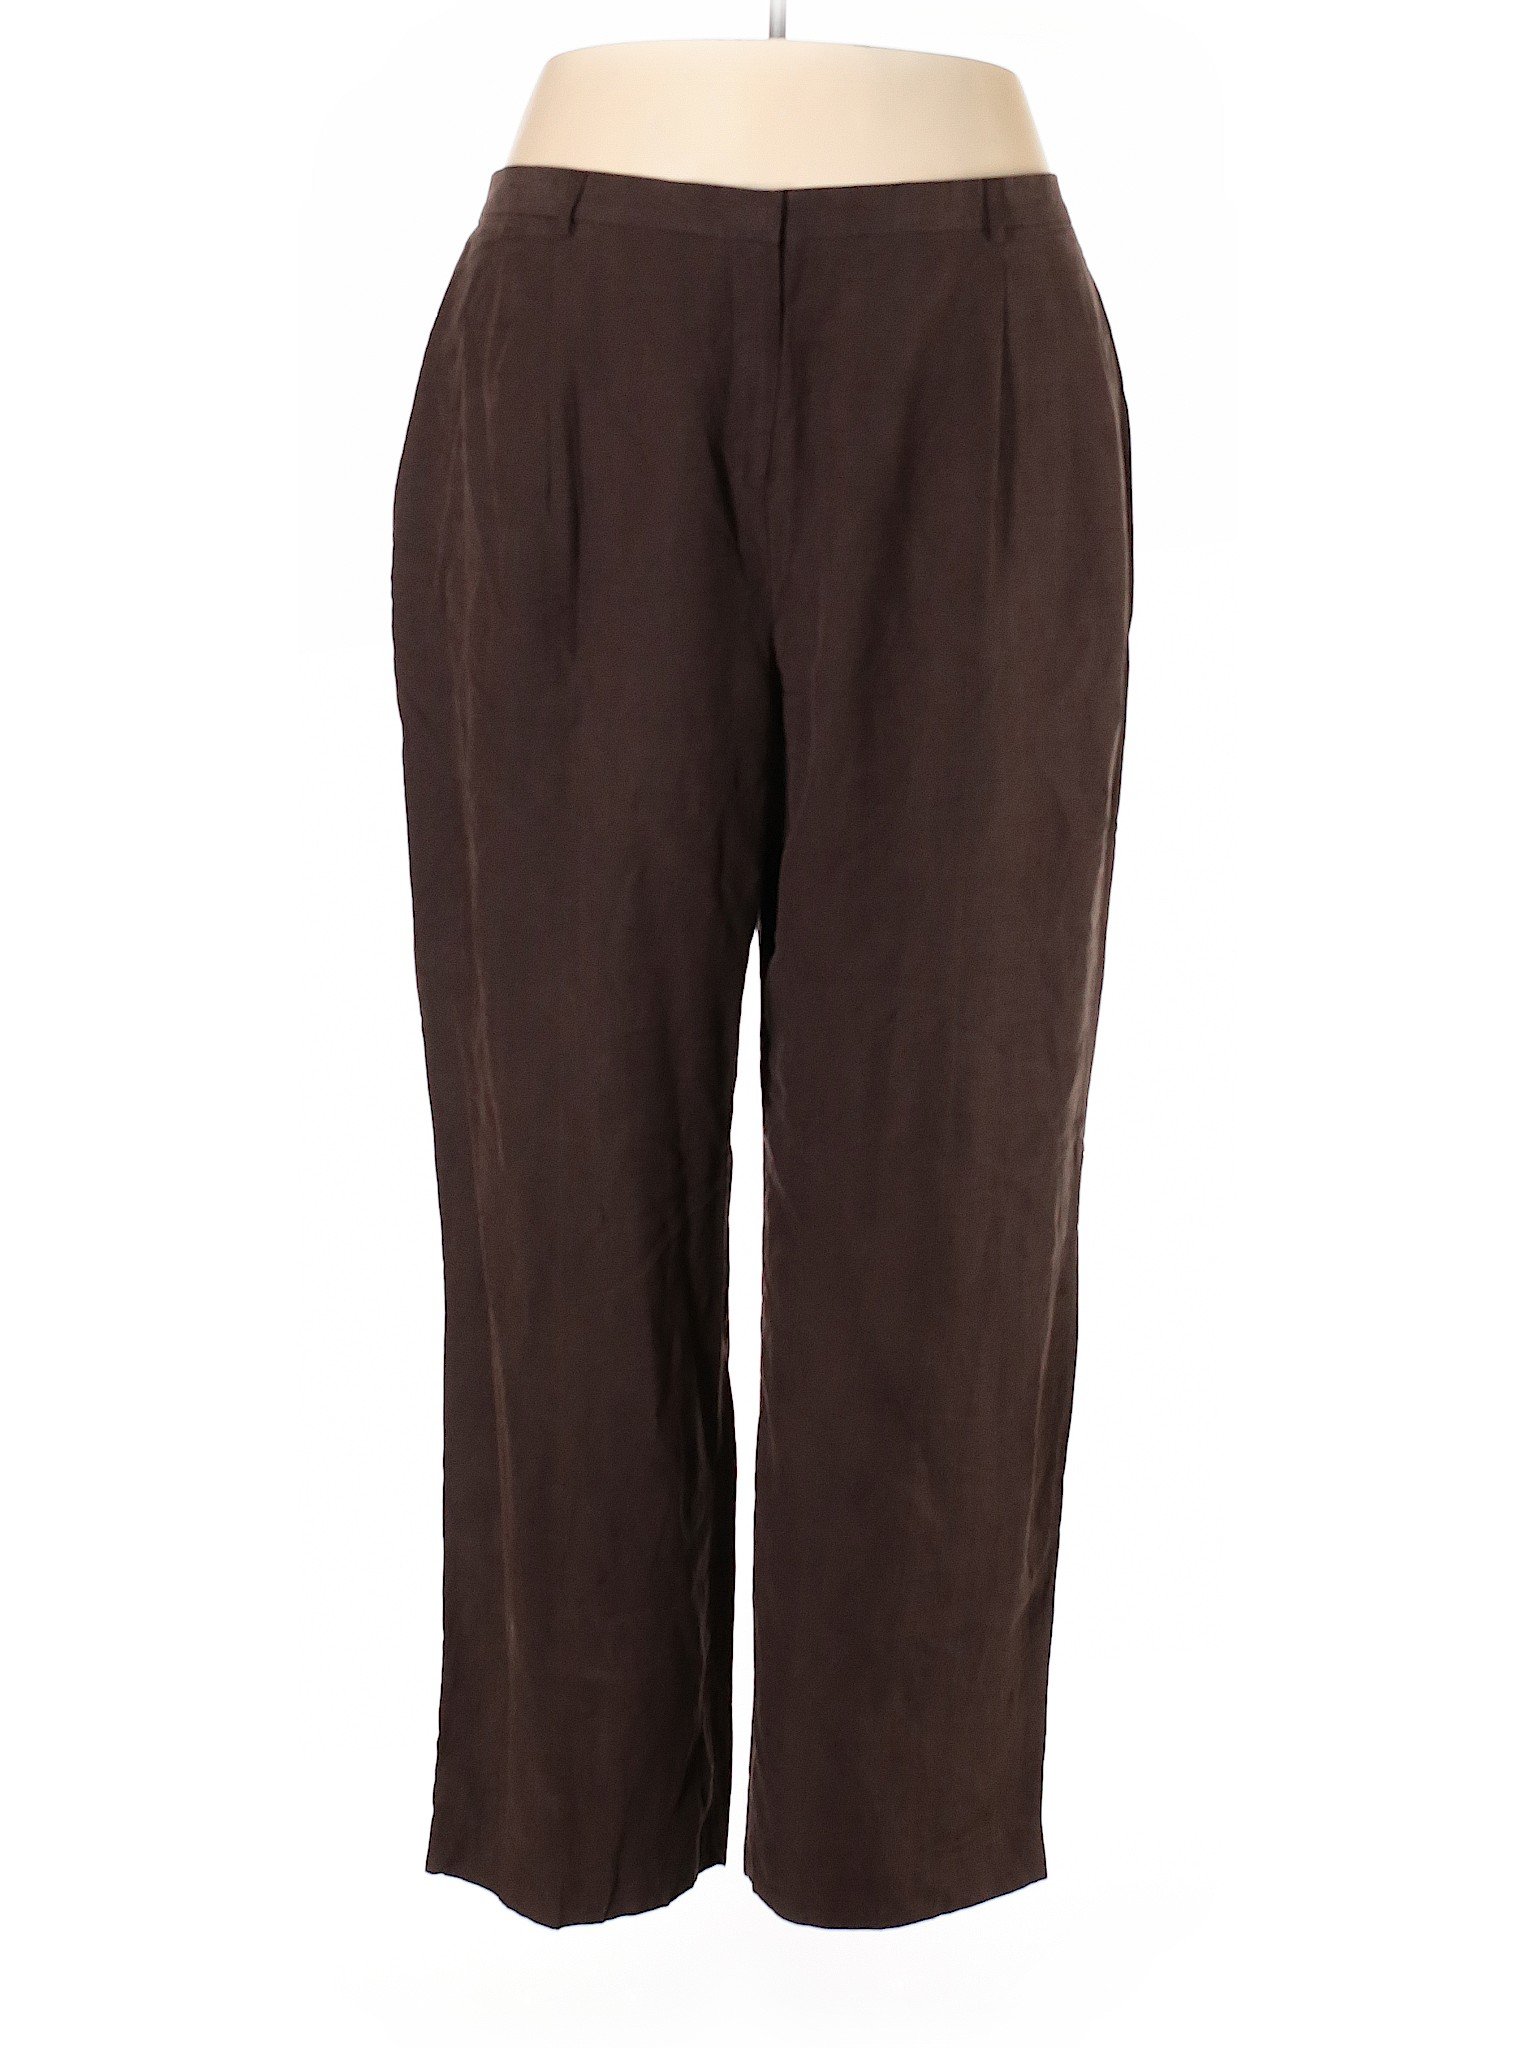 NWT Jones New York Women Brown Silk Pants 24 Plus | eBay